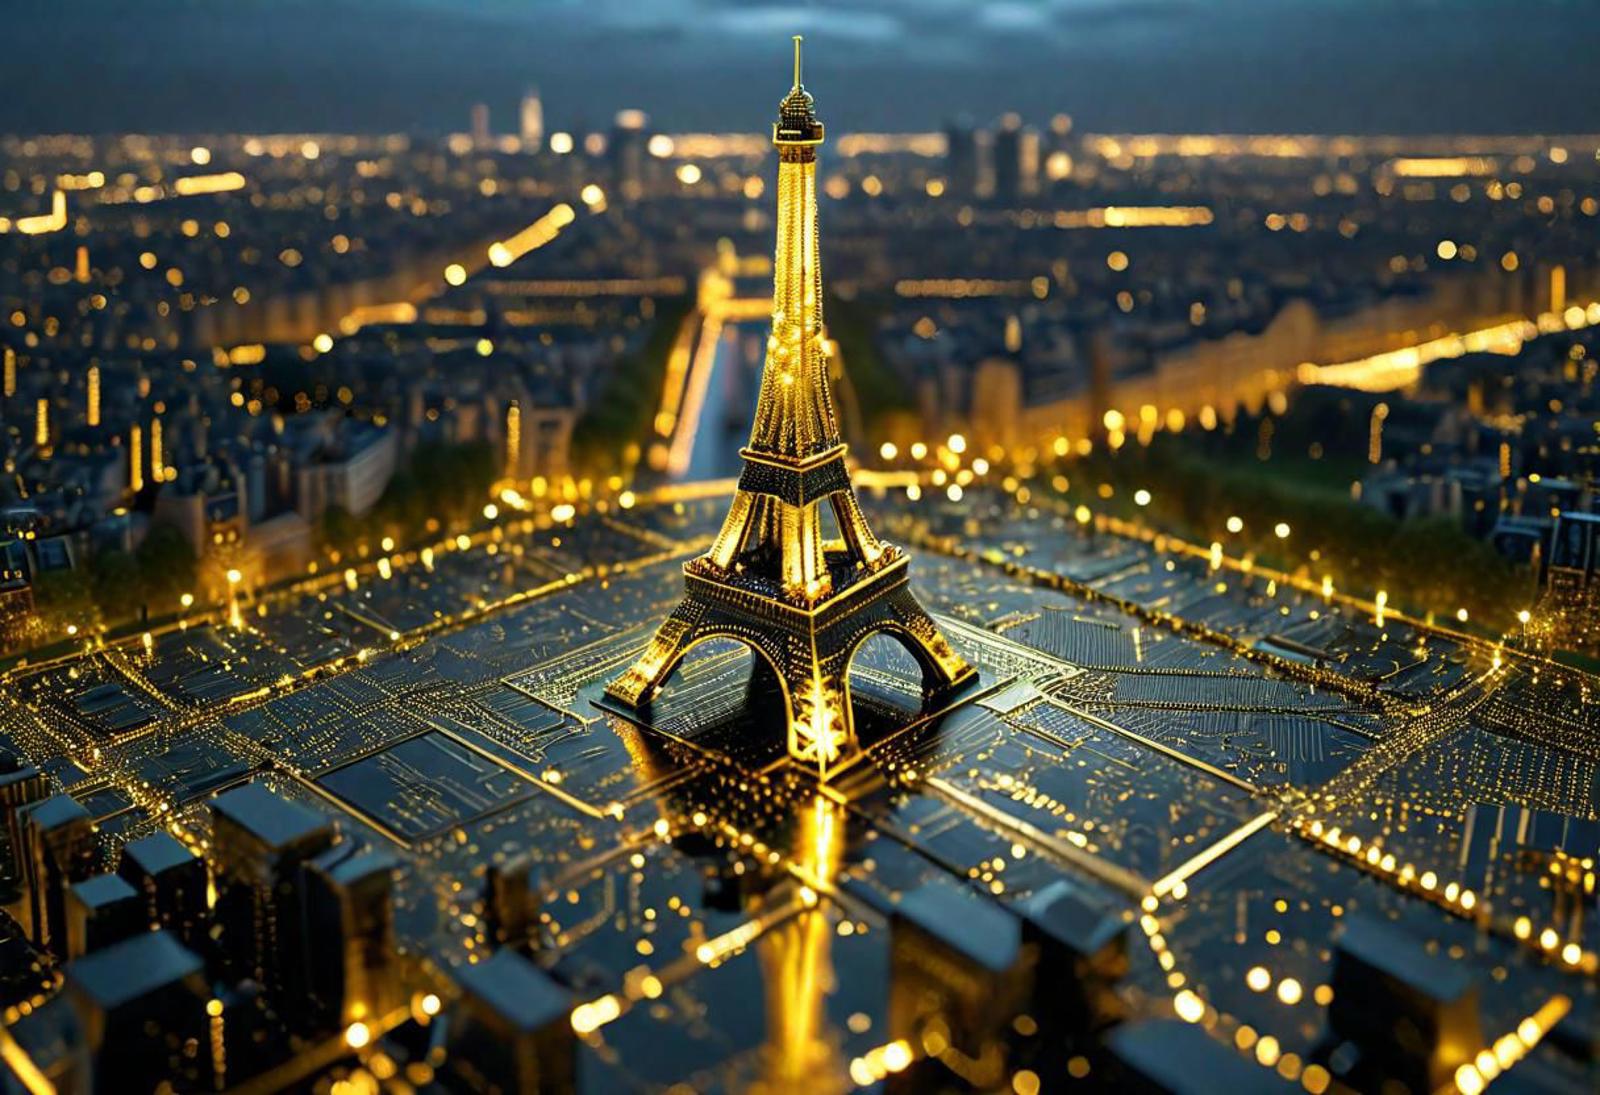 Illuminated Eiffel Tower in Paris, France at Night